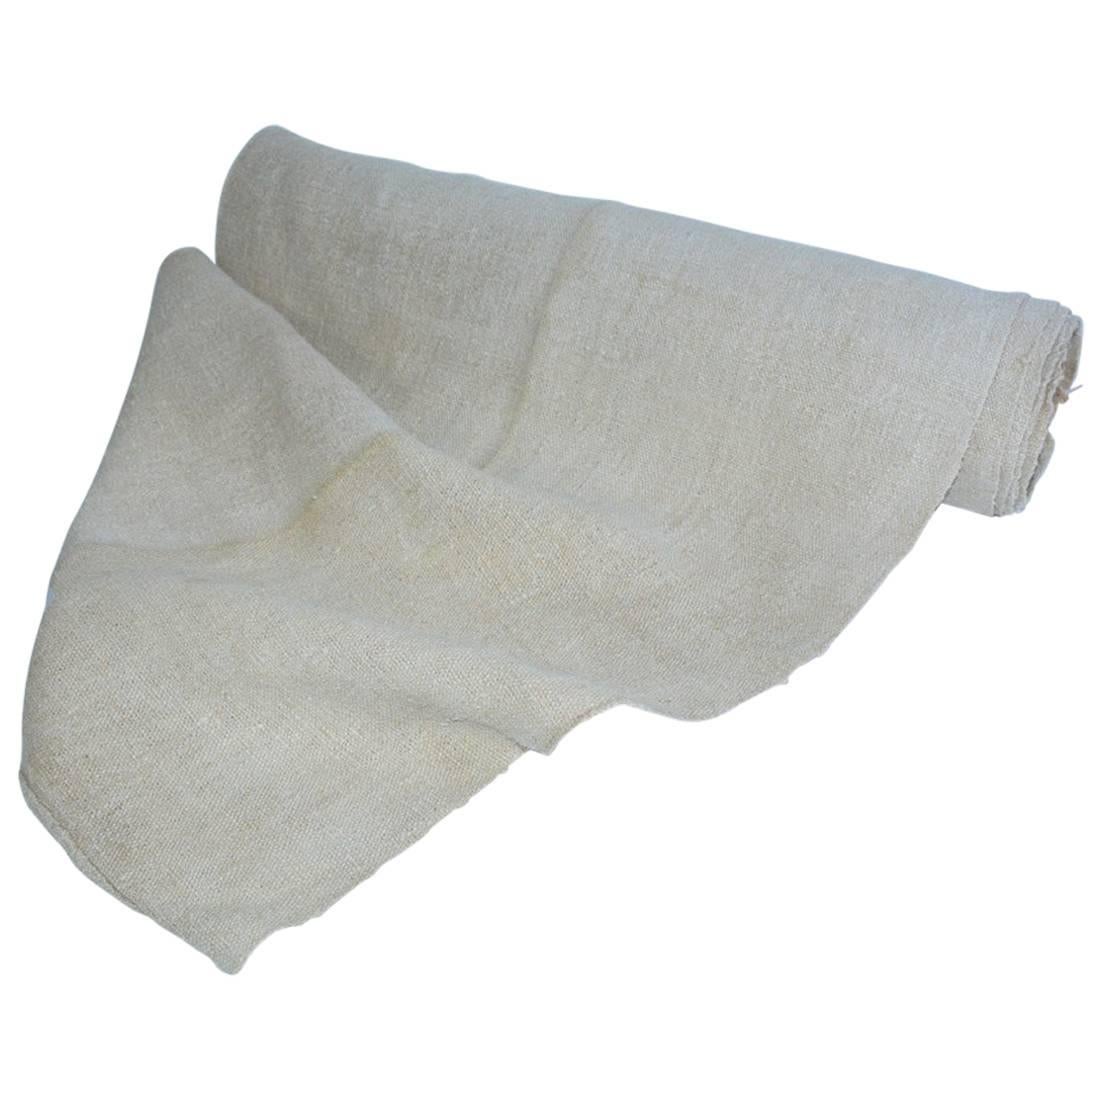 Vintage Linen Grain Sack Fabric